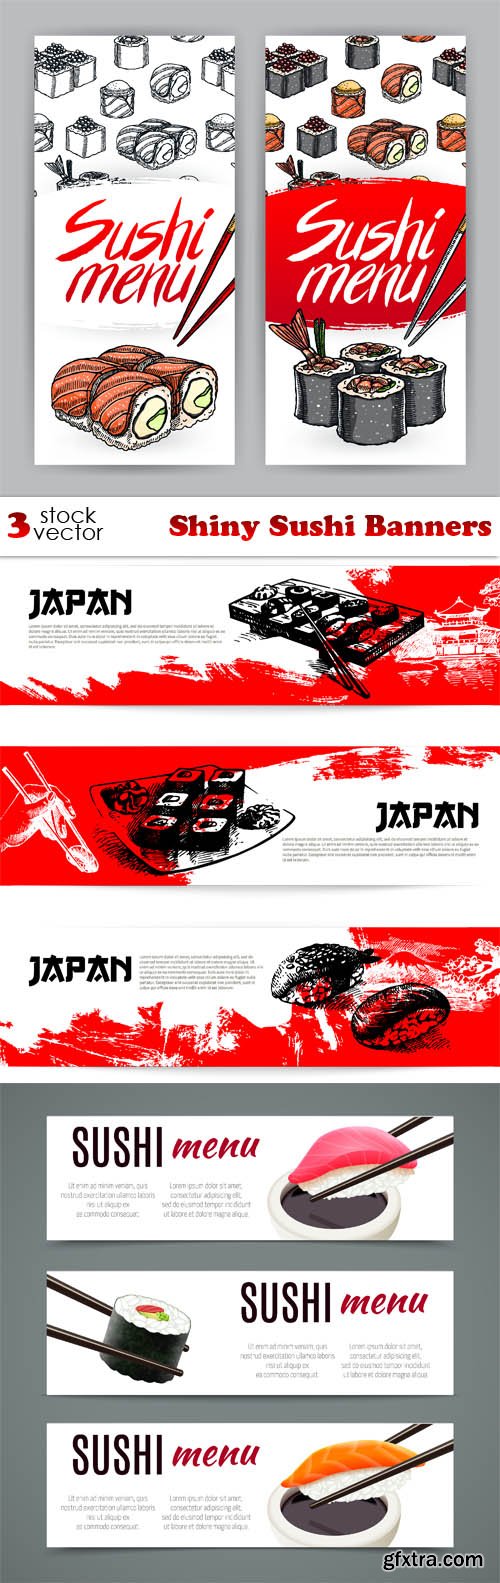 Vectors - Shiny Sushi Banners